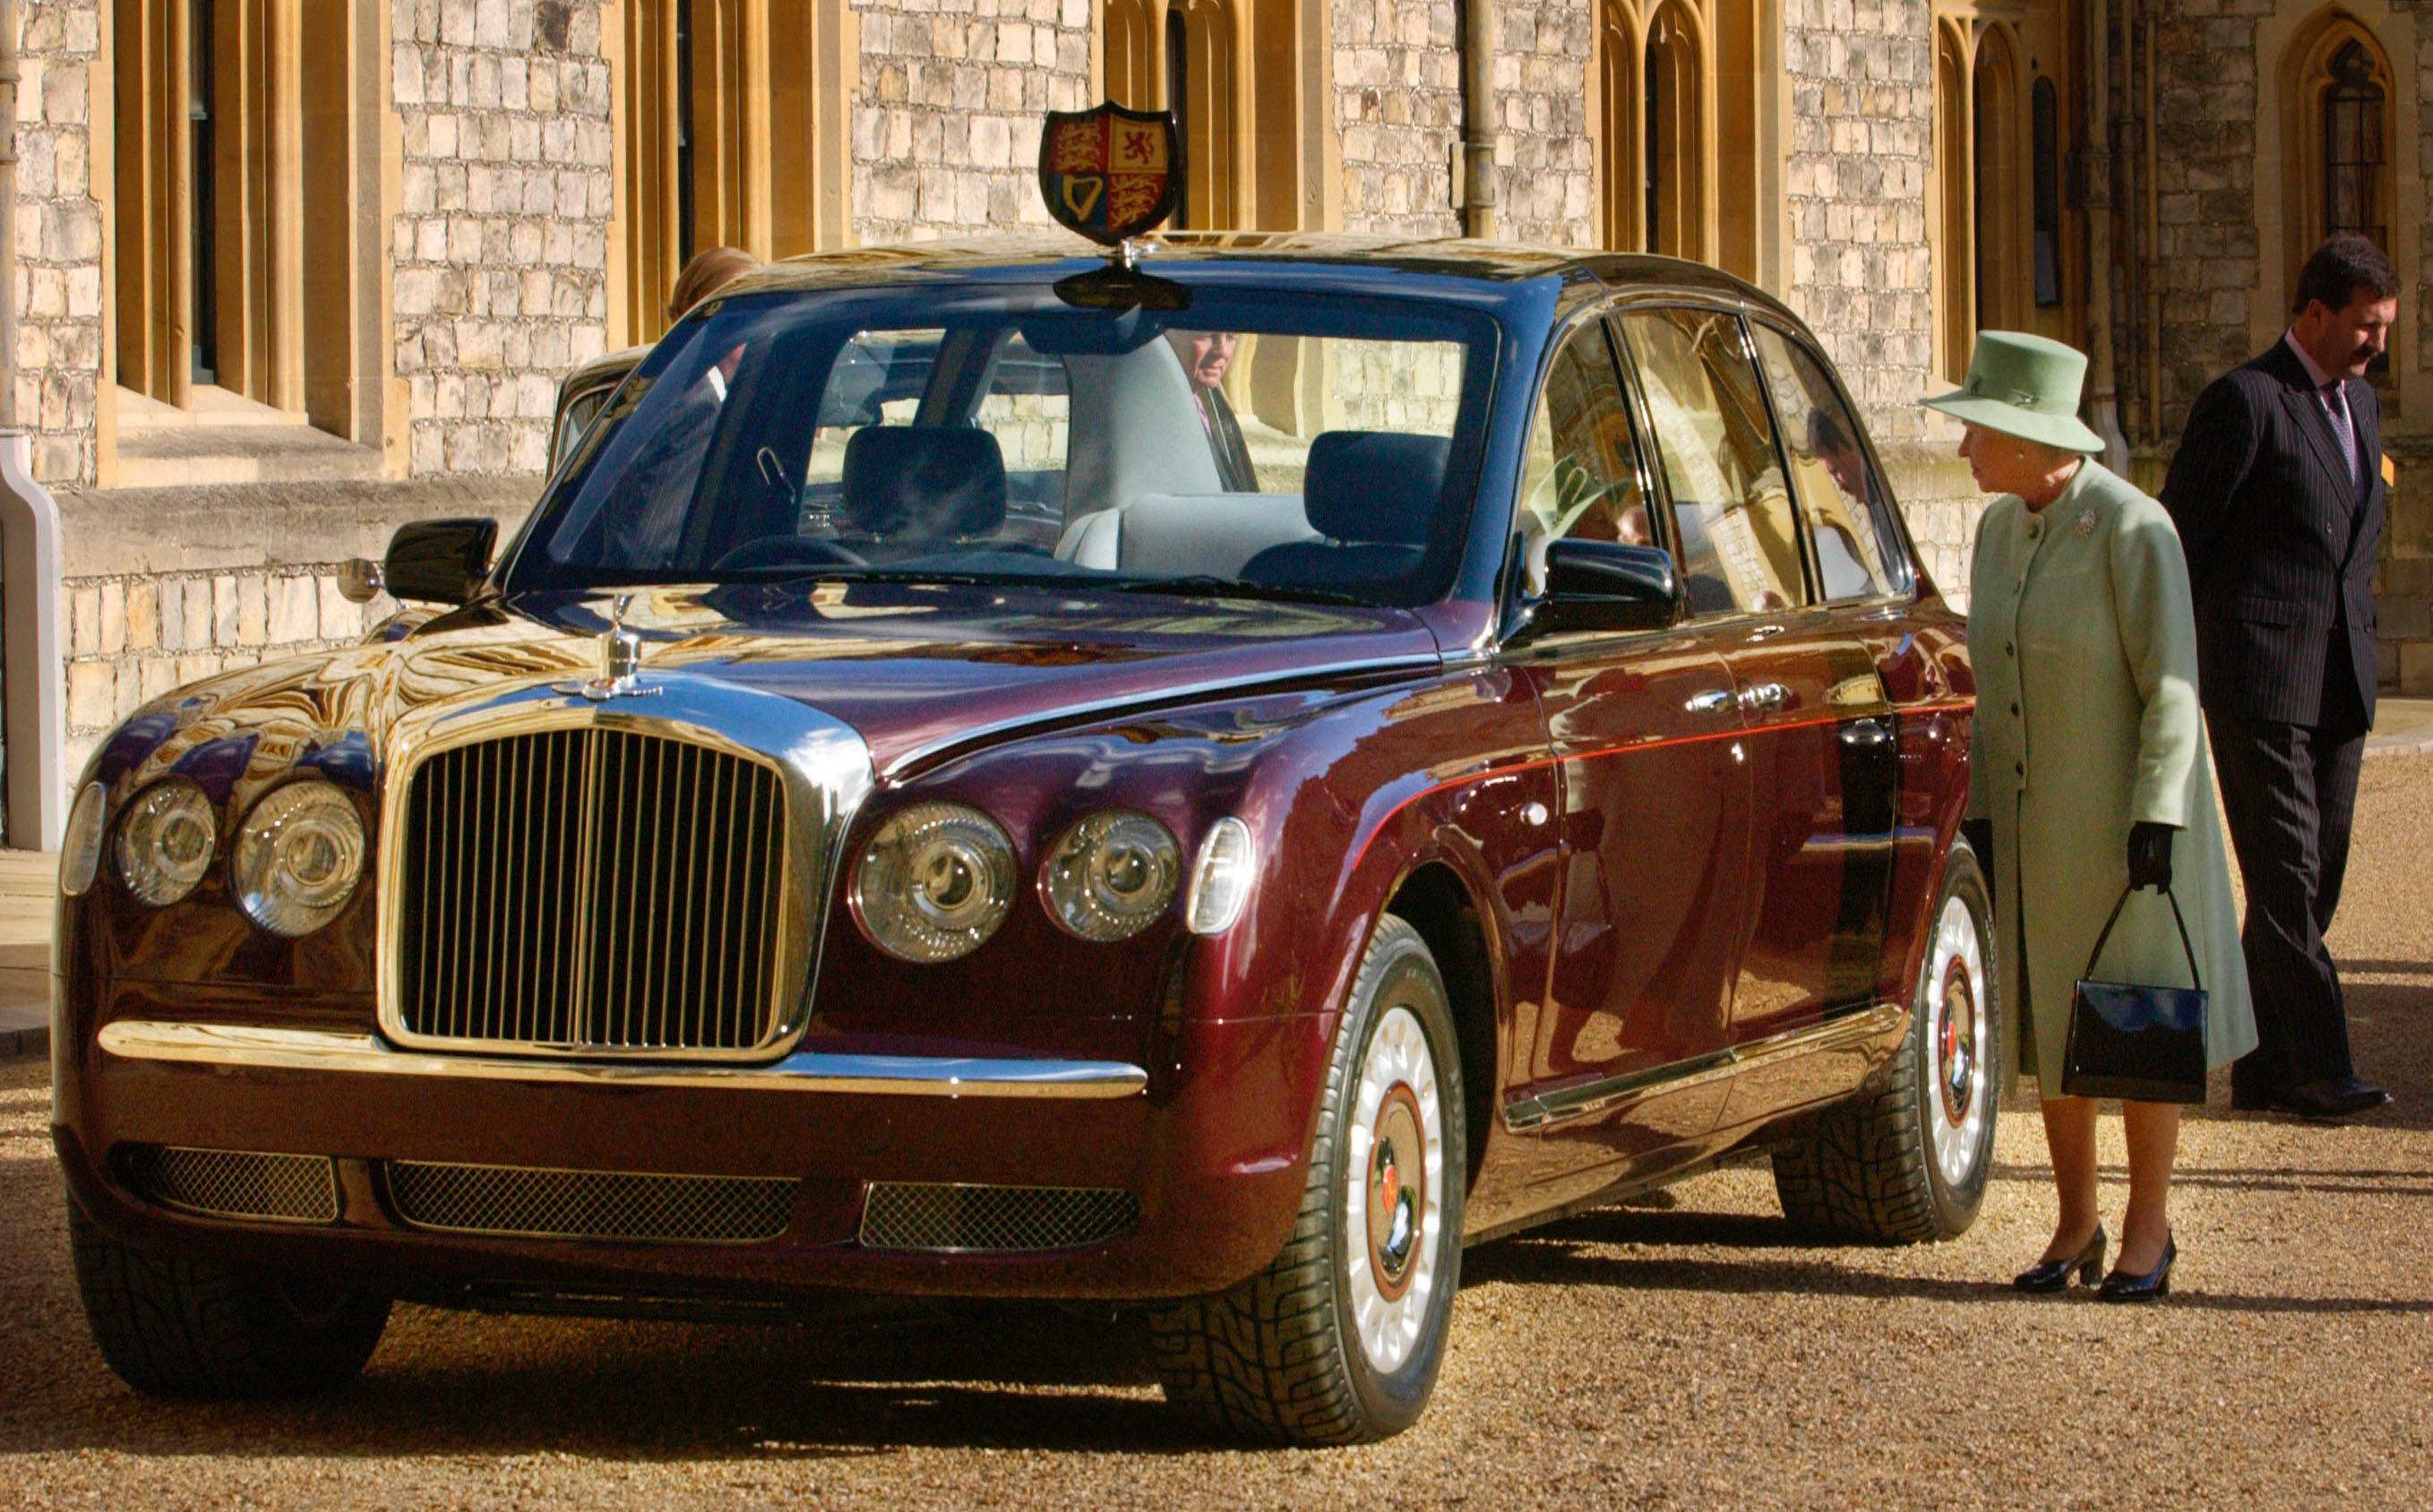 State cars. Роллс Ройс королевы Елизаветы 2. Bentley State Limousine Елизаветы II. Автомобиль королевы Англии - Bentley State Limousine. Бентли королевы Елизаветы 2.